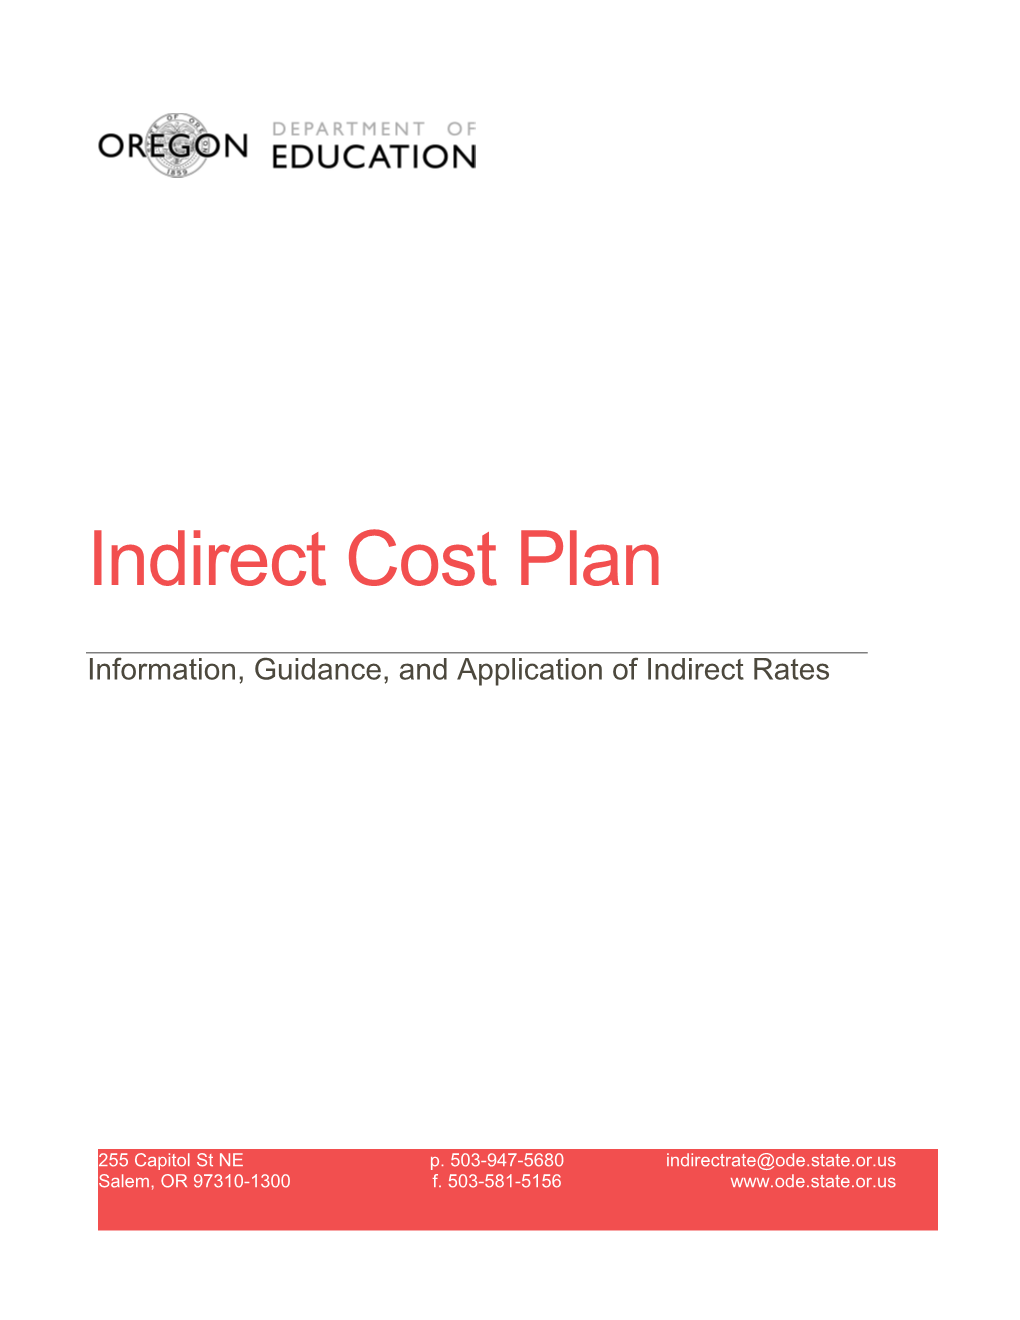 LEA Indirect Cost Plan Handbook